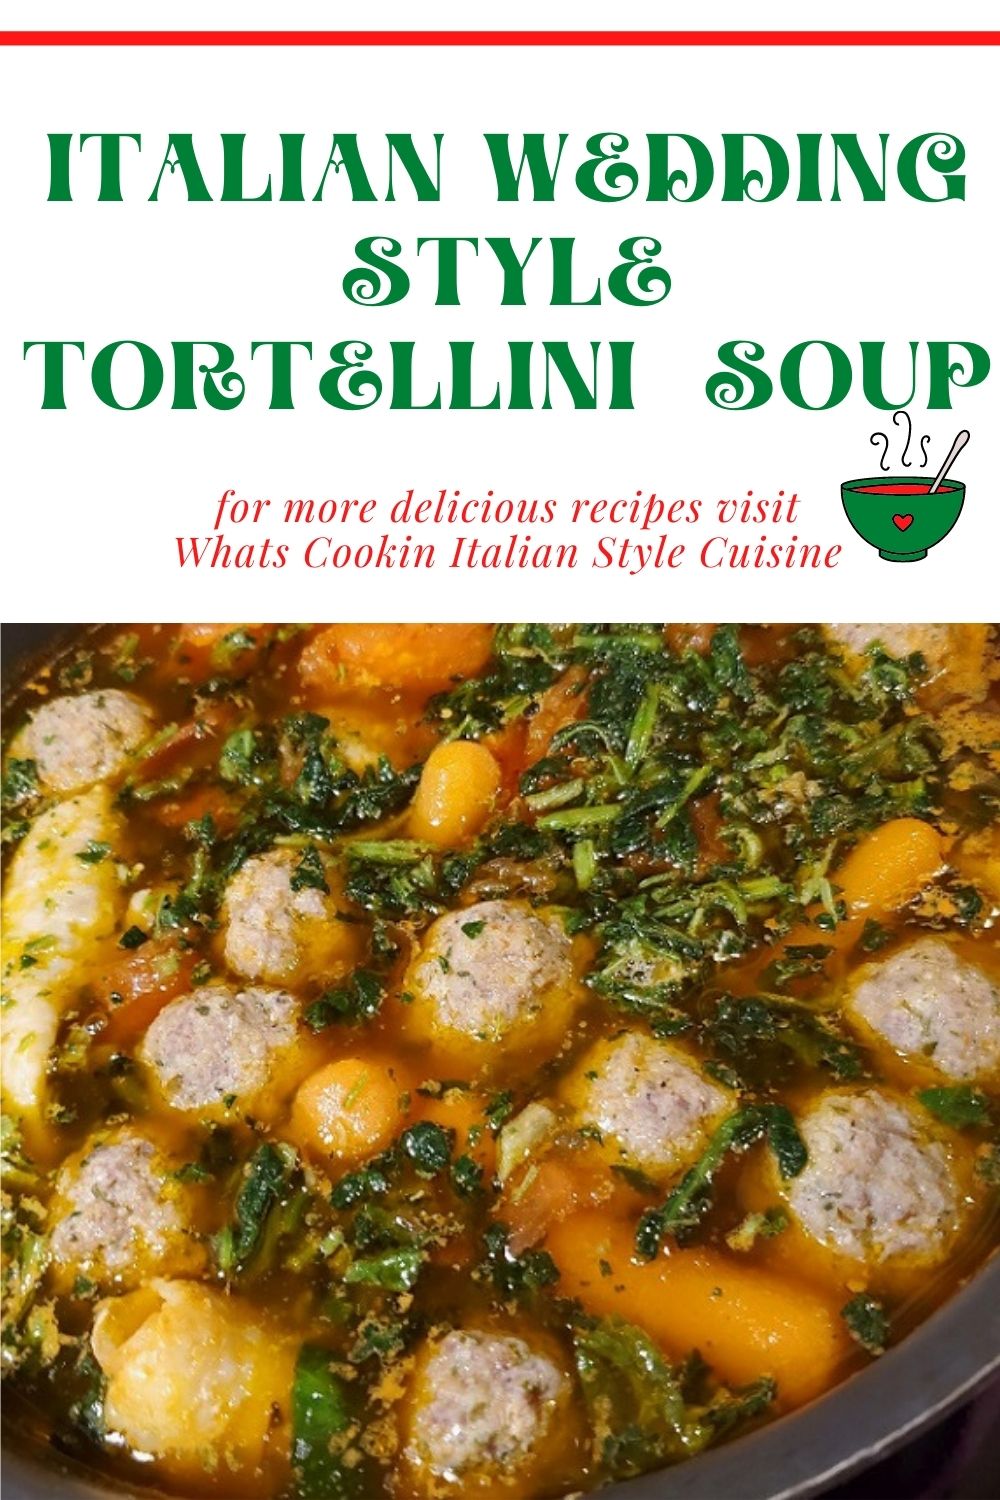 Italian Wedding Style Tortellini Soup | What's Cookin' Italian Style ...